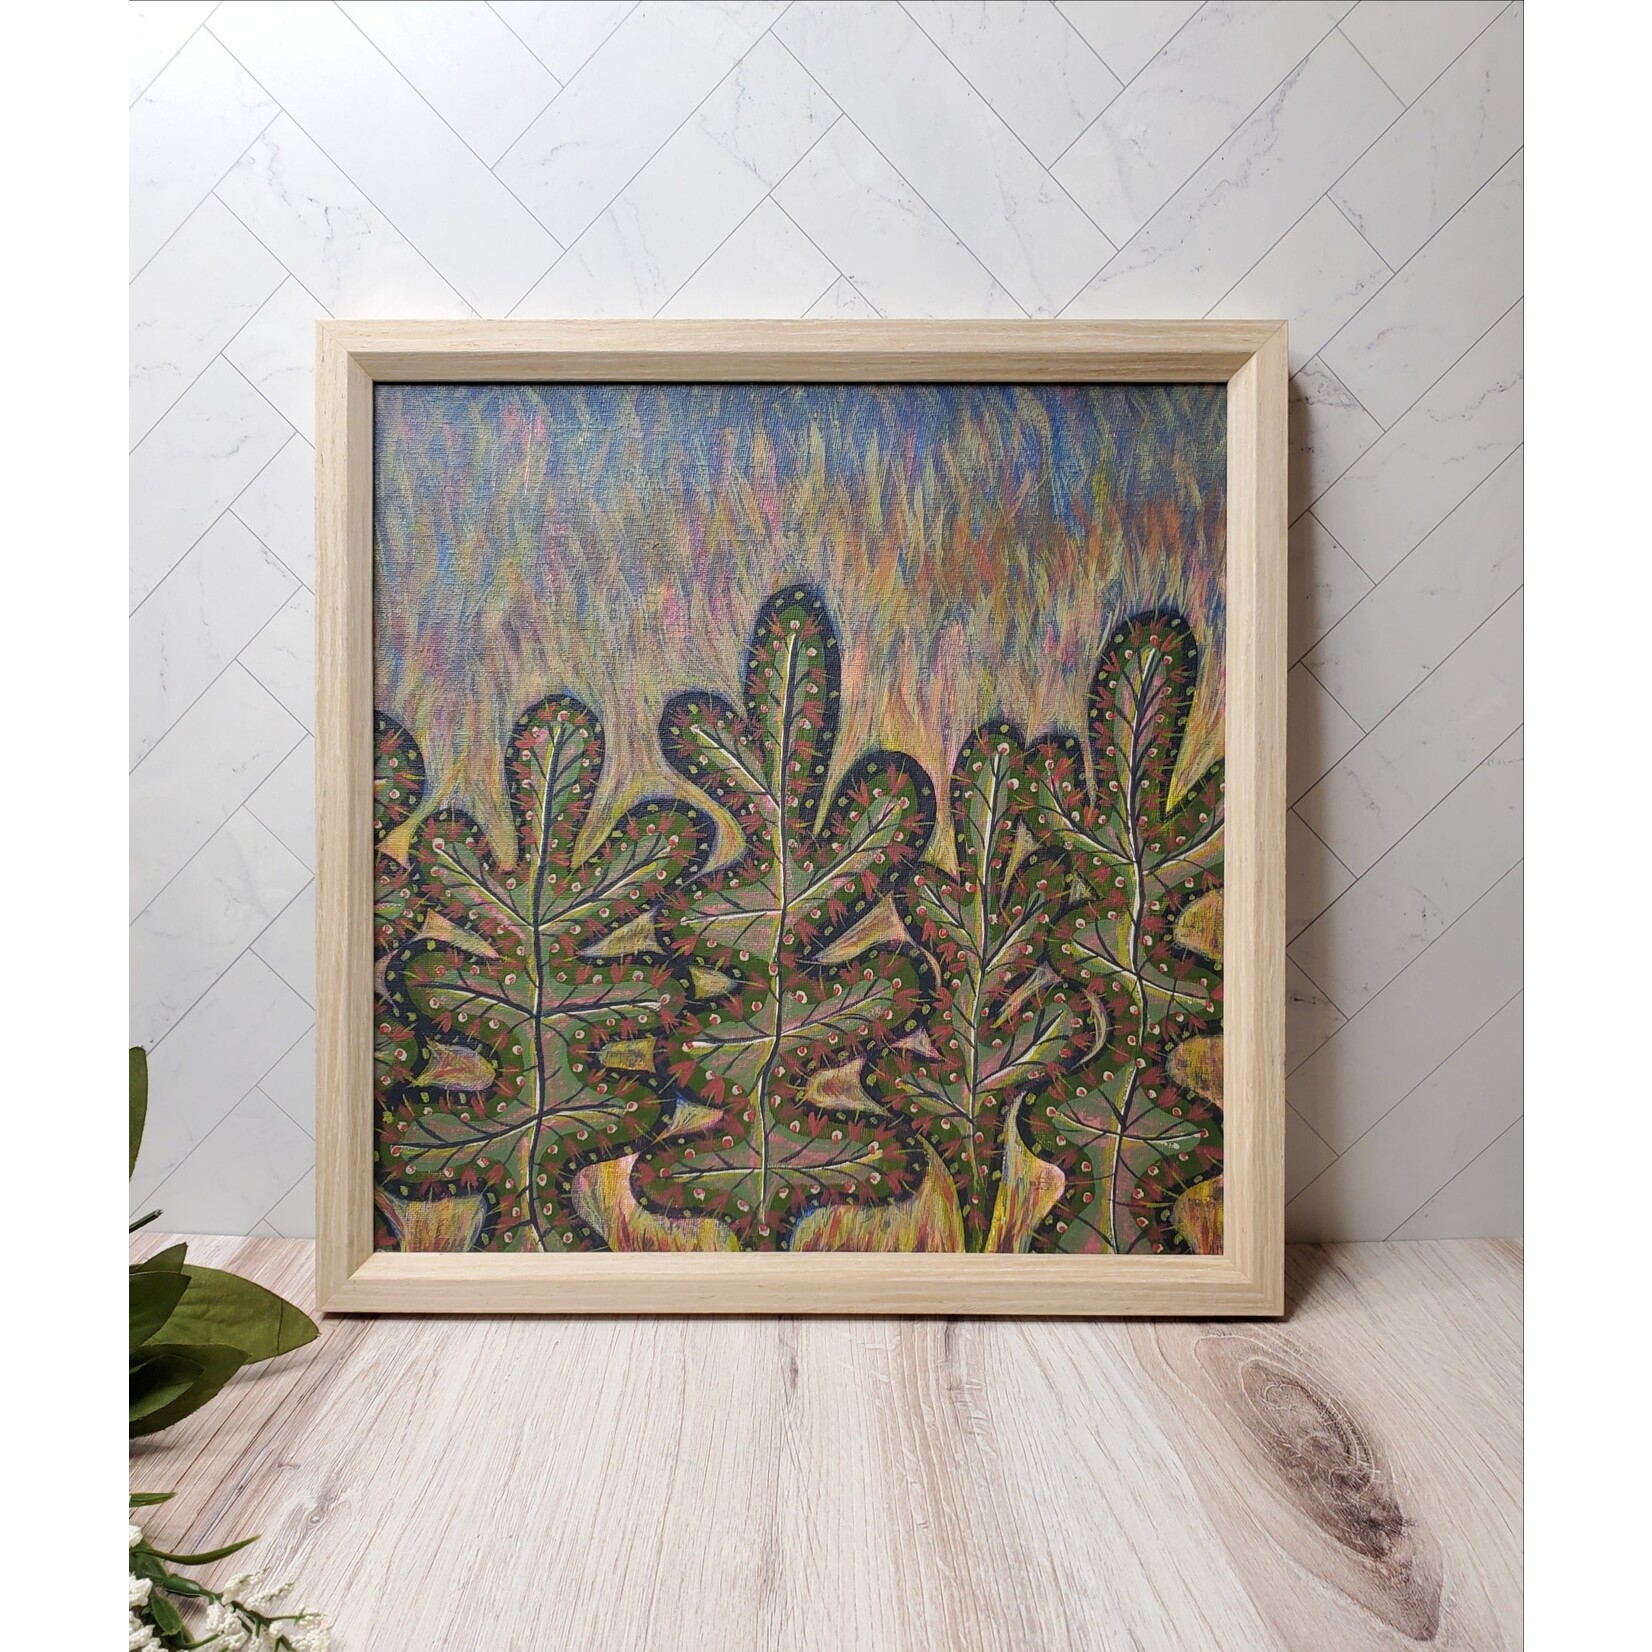 Joy Time Now "Fantasy Forest Foliage" - Framed Acrylic Original - 12x12"